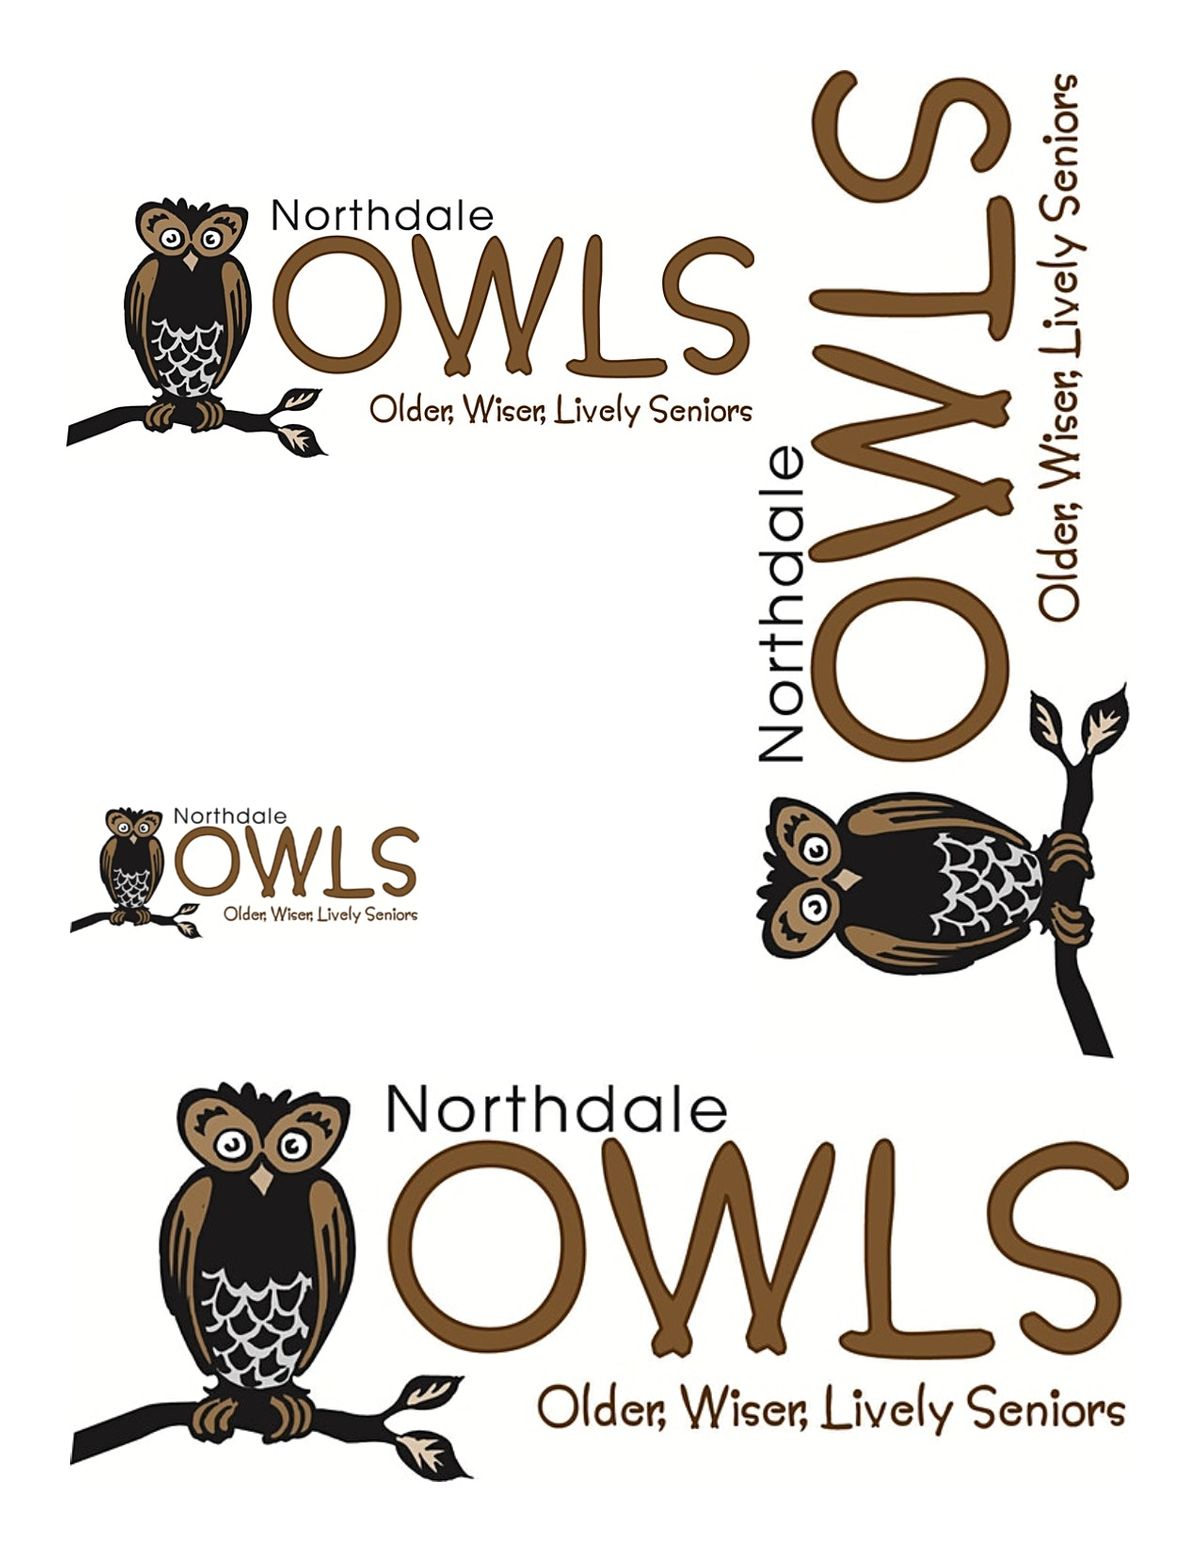 Northdale OWLS Sponsorship Table- December 6, 2022